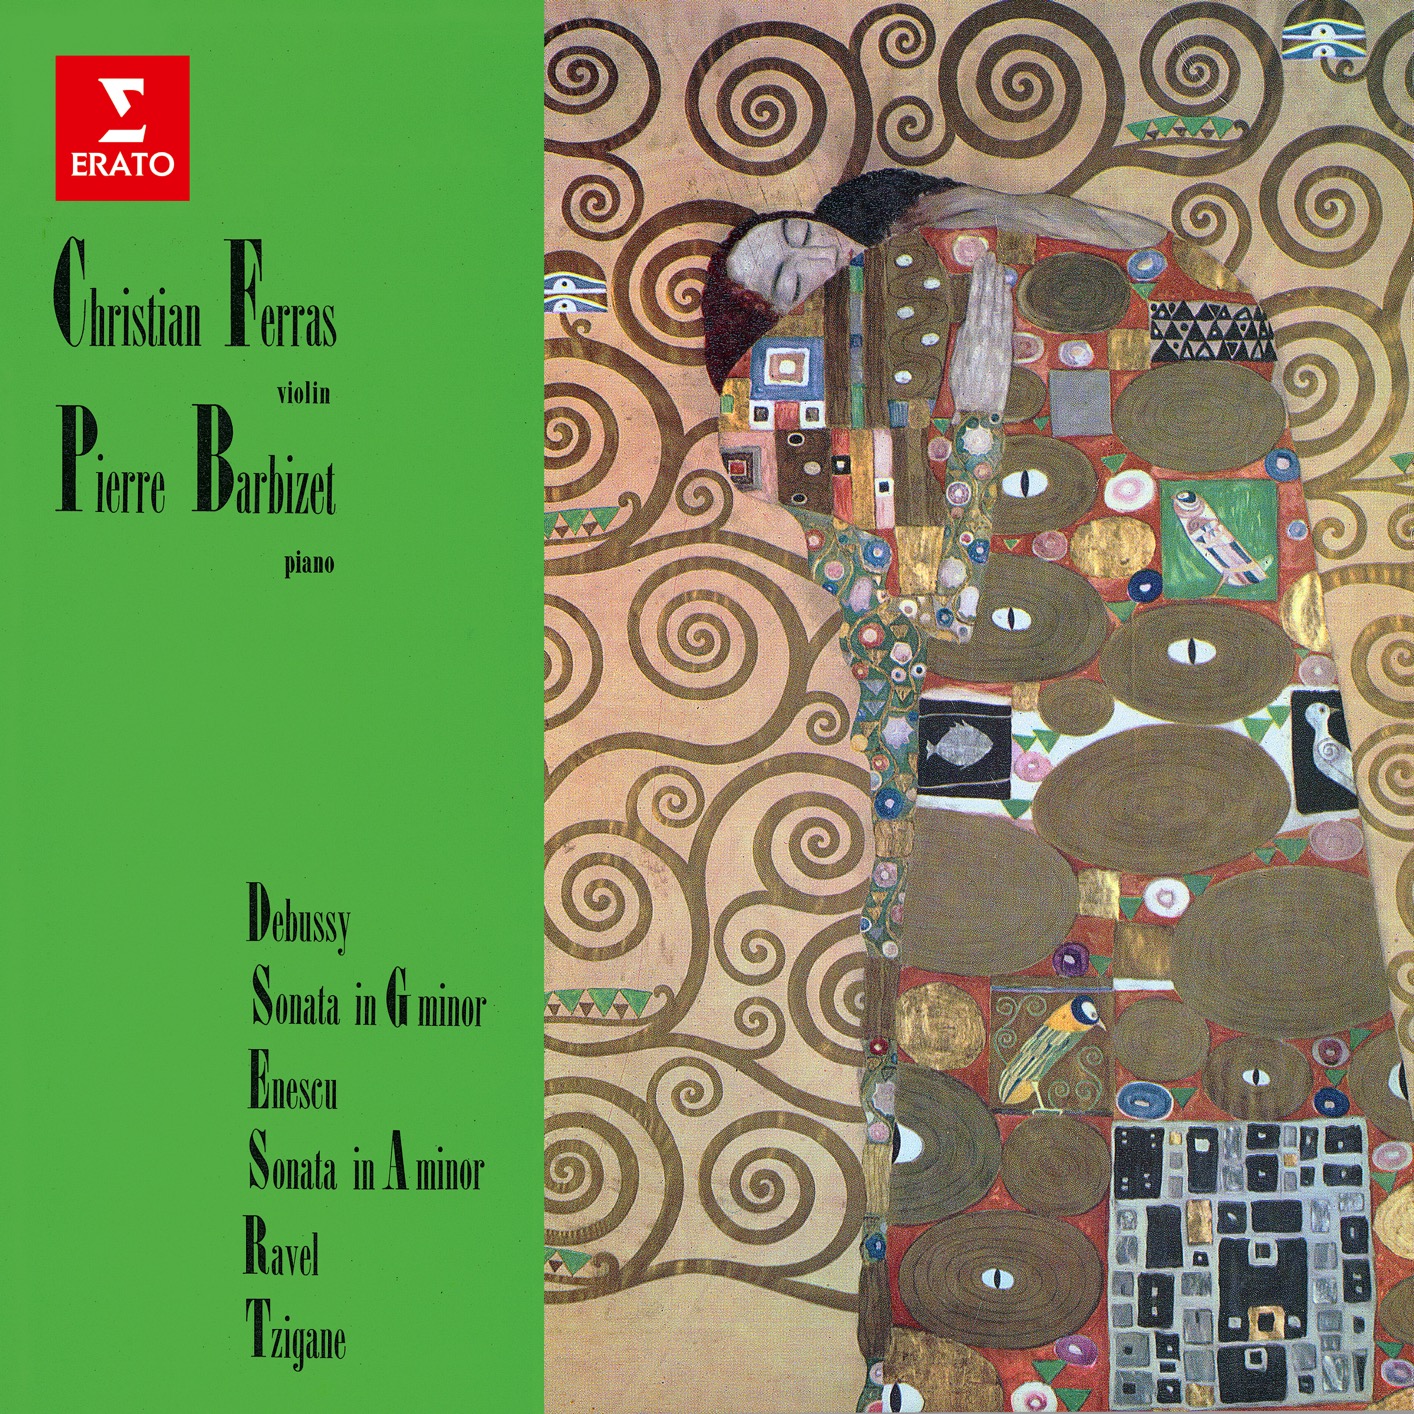 Christian Ferras & Pierre Barbizet – Debussy & Enescu: Violin Sonatas – Ravel: Tzigane (Remastered) (1962/2020) [FLAC 24bit/96kHz]